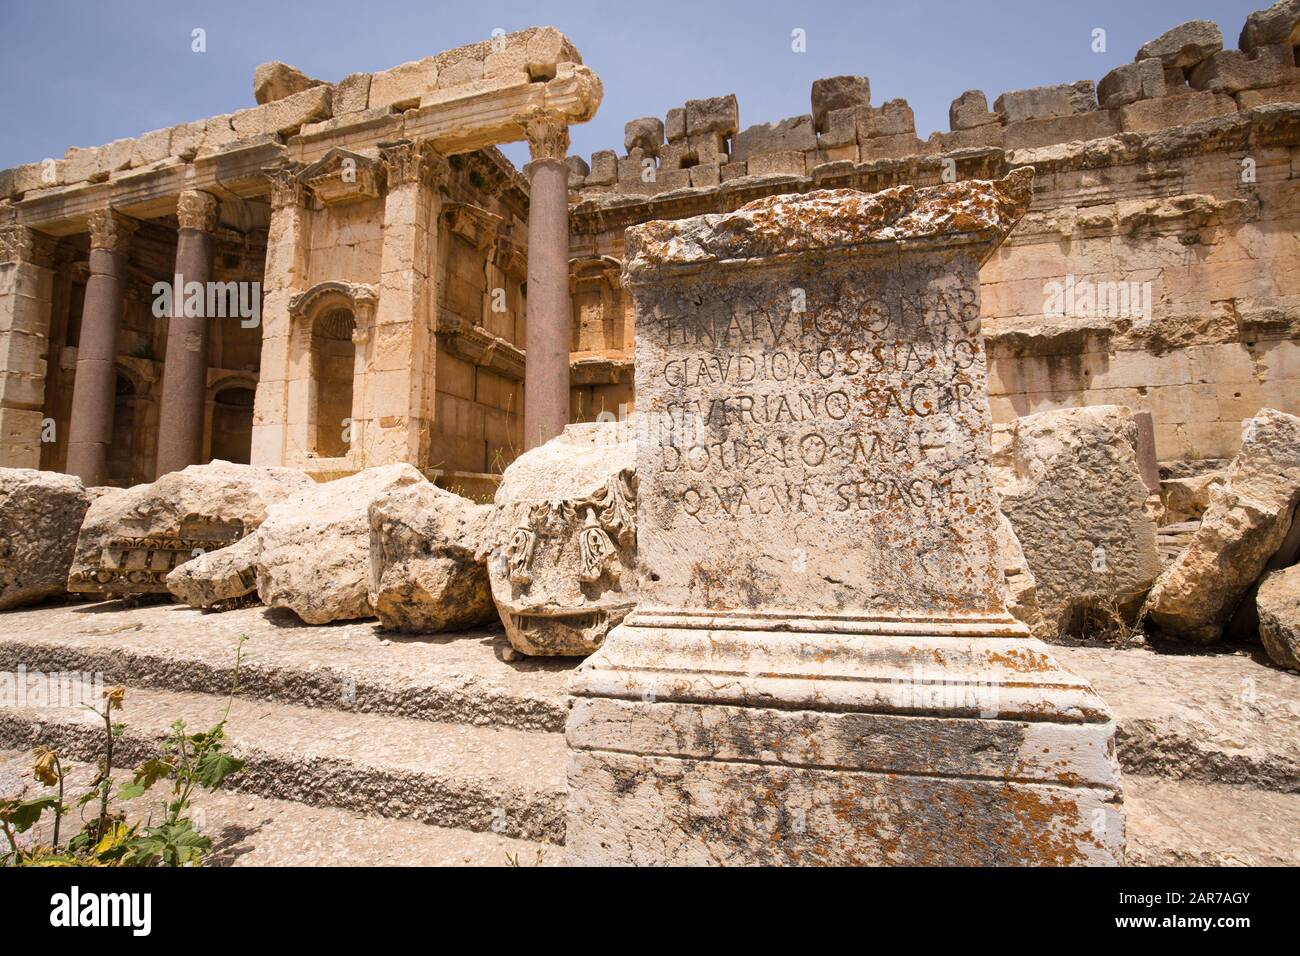 Roman inscription. The ruins of the Roman city of Heliopolis or Baalbek in the Beqaa Valley. Baalbek, Lebanon - June, 2019 Stock Photo